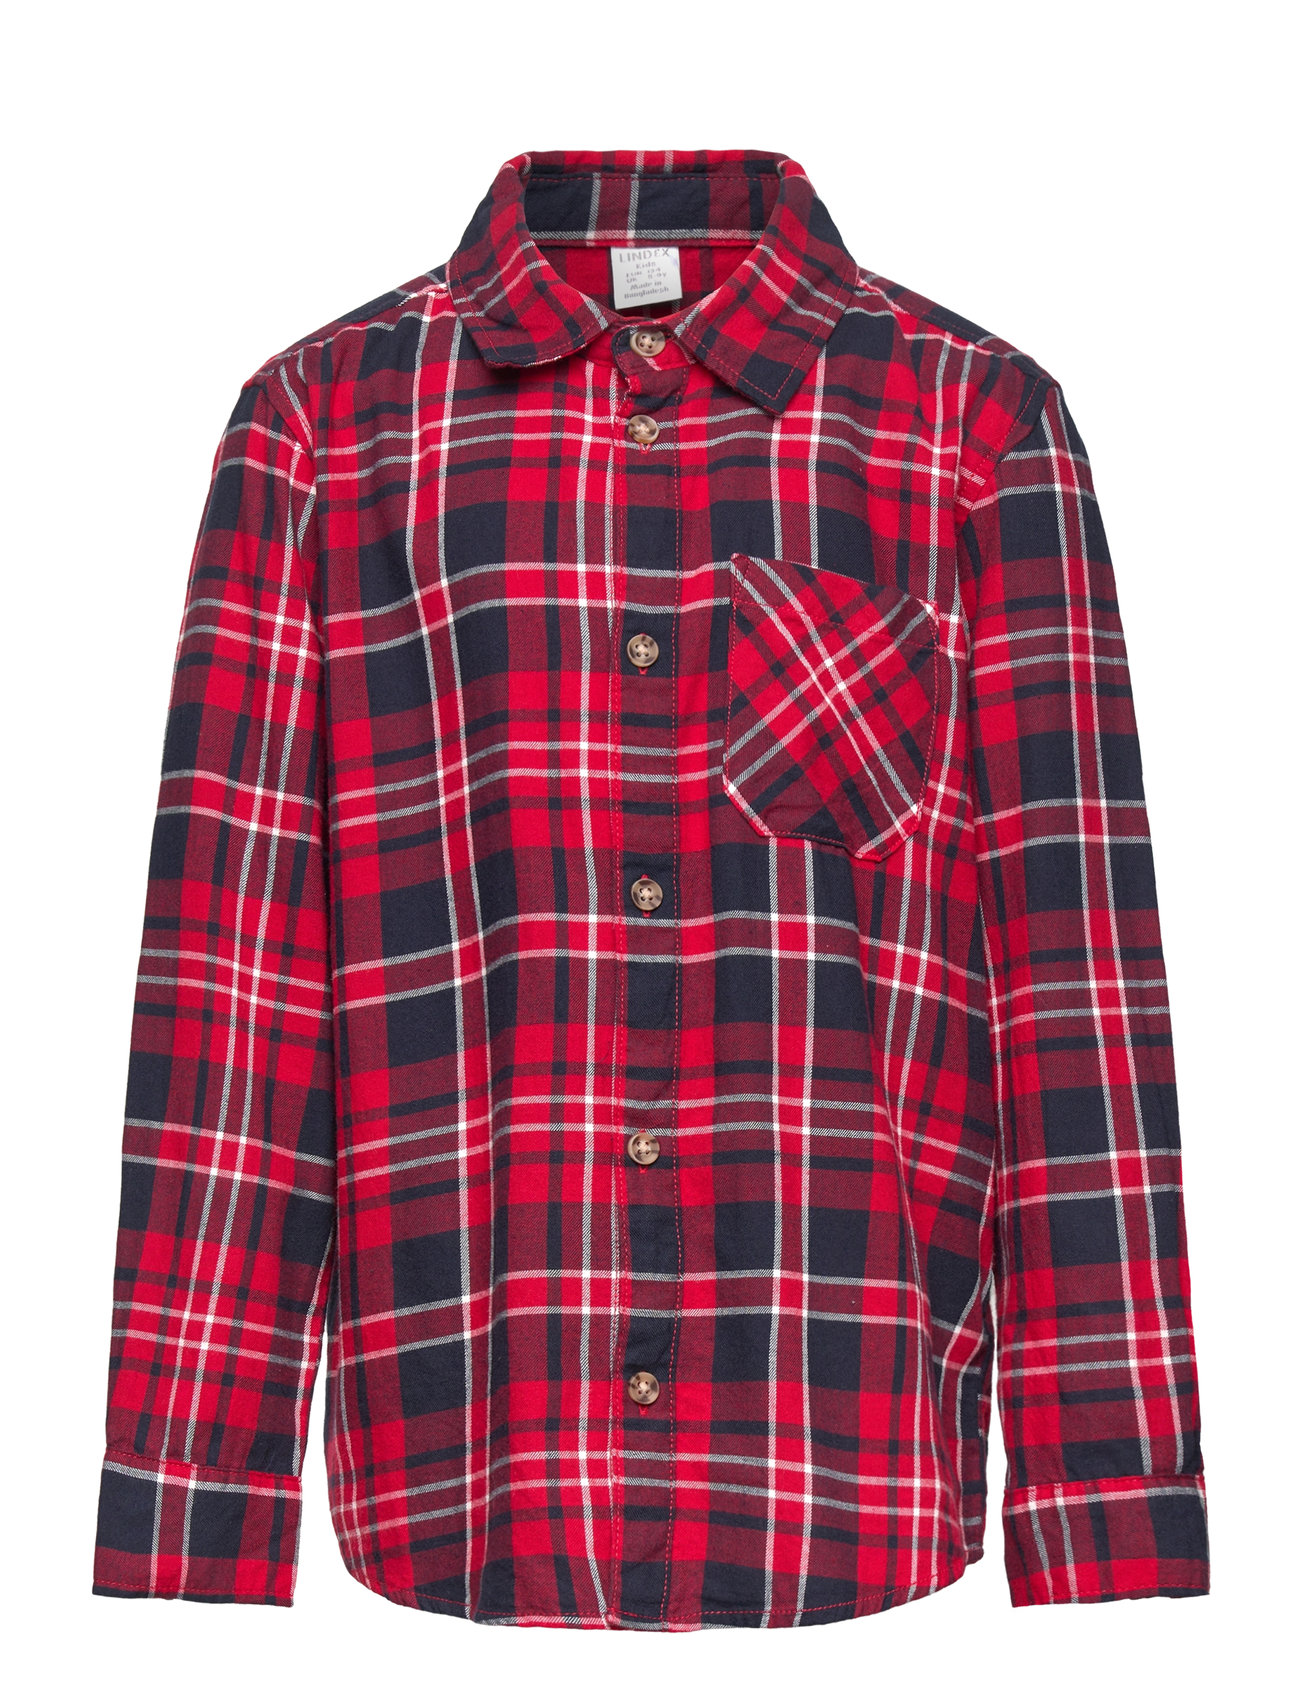 Shirt Flannel Check Tops Shirts Long-sleeved Shirts Red Lindex